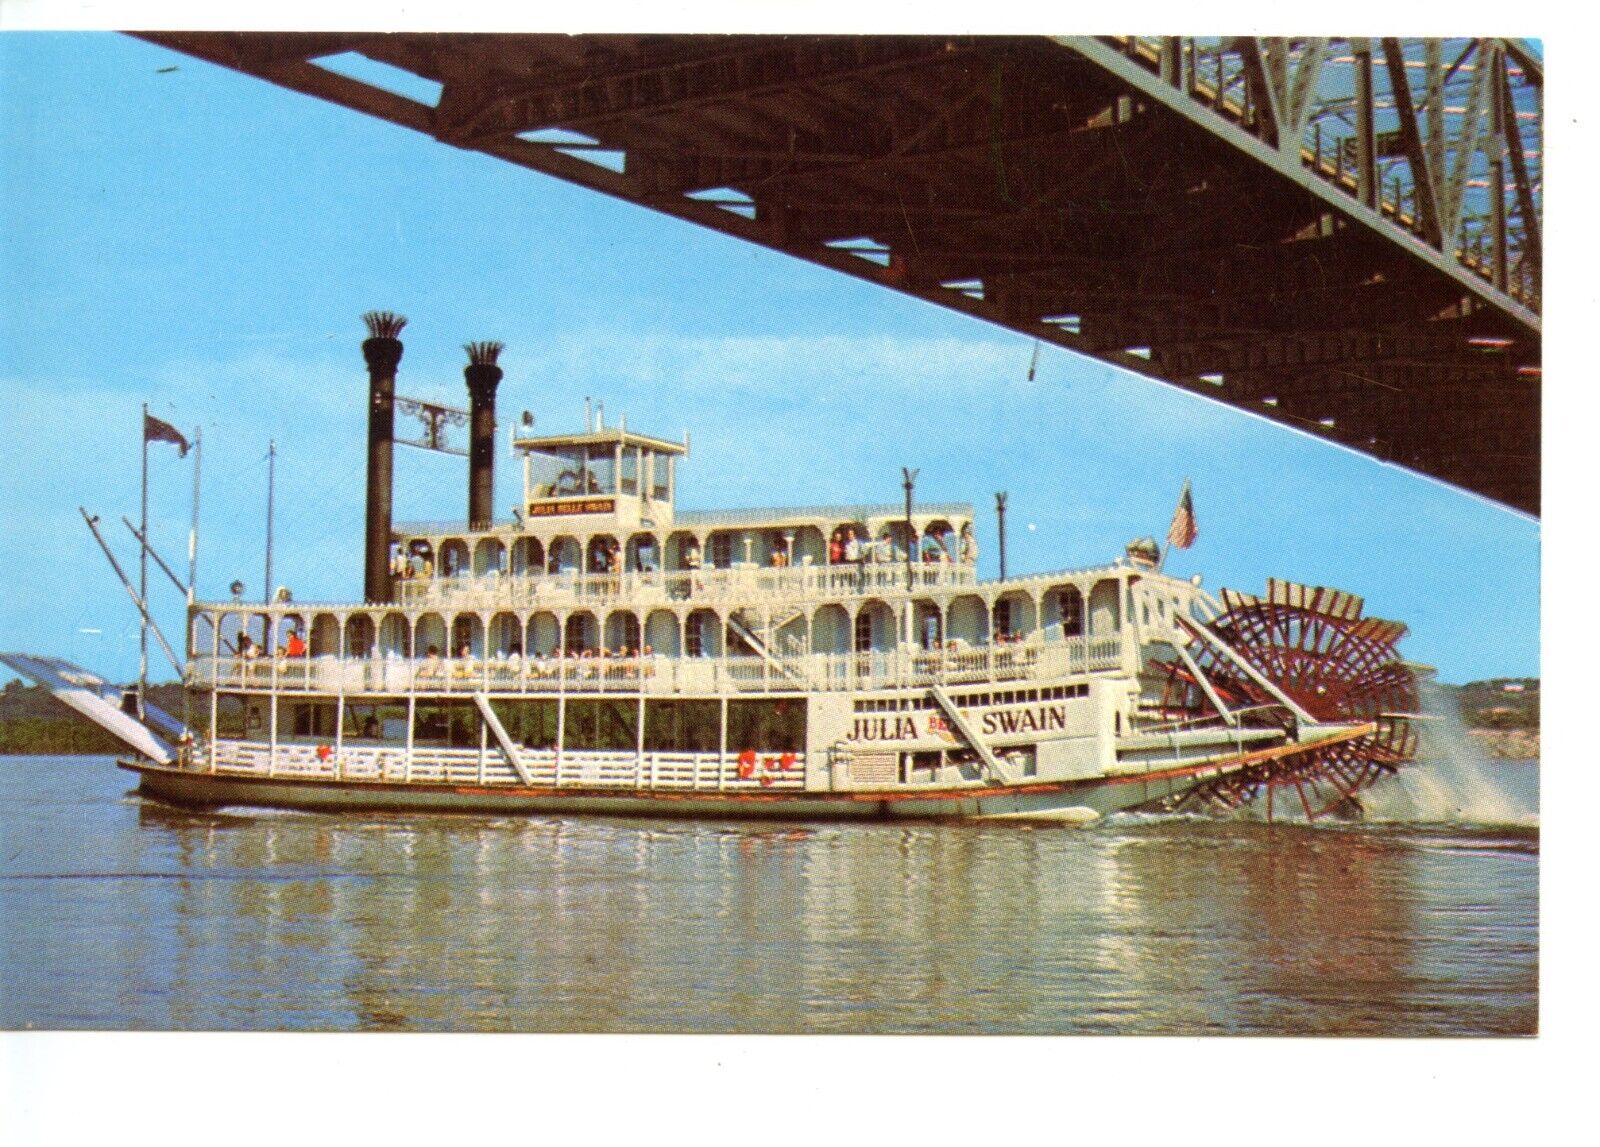 Sternwheel Steamboat SS Julia Belle Swain-Peoria-Illinois-Vintage Postcard